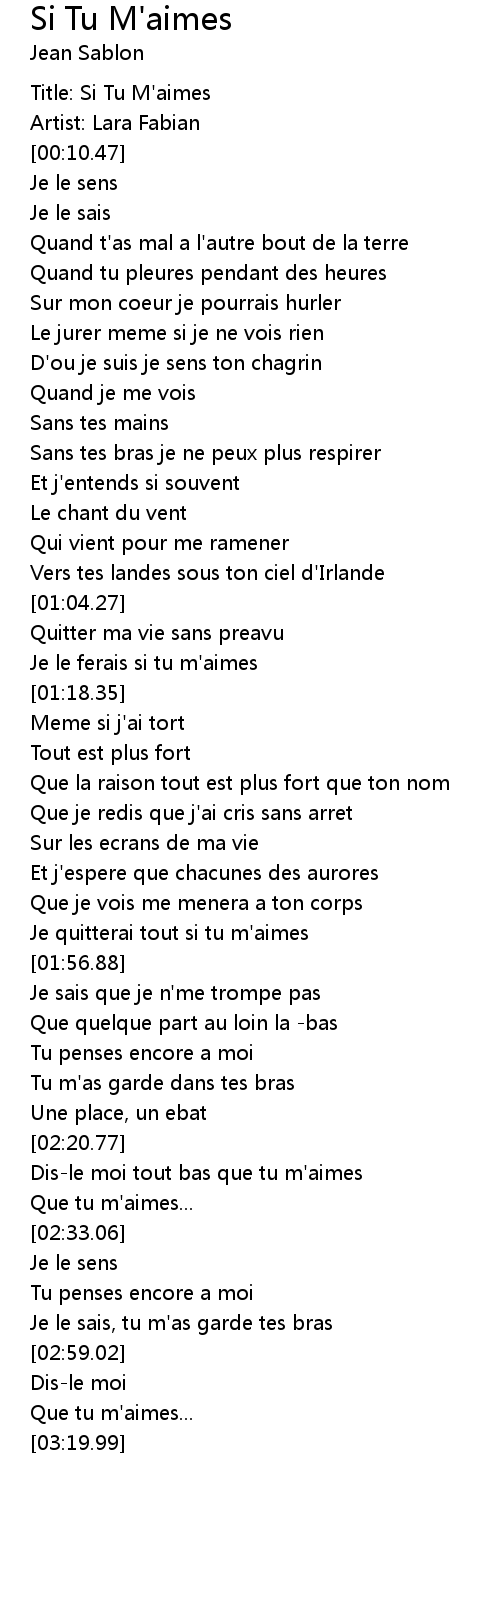 Est Ce Que Tu M Aimes Lyrics French